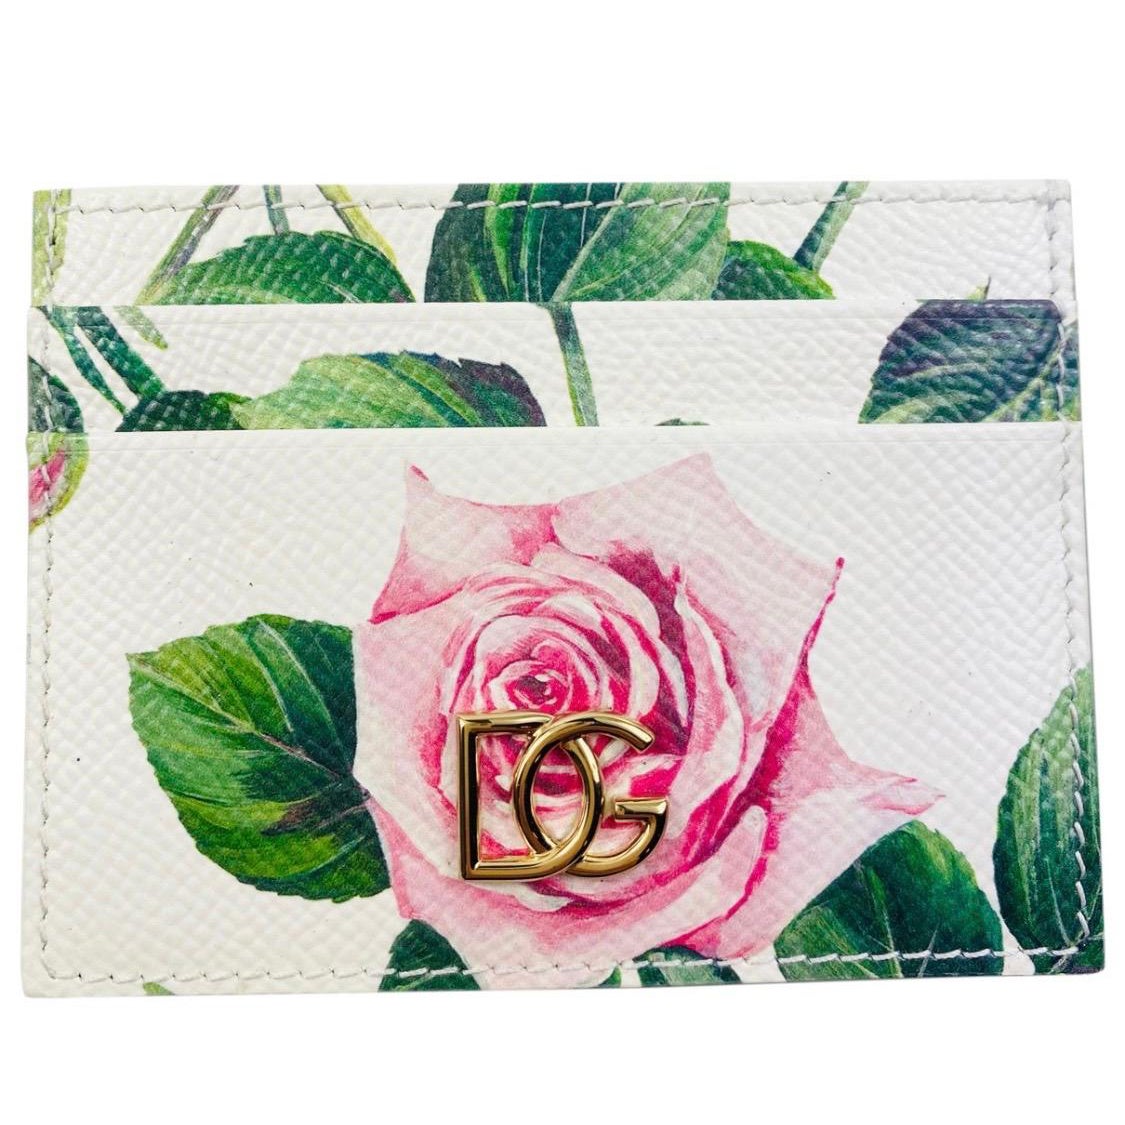 Dolce & Gabbana Tropical Rose
printed Vitello leather cardholder